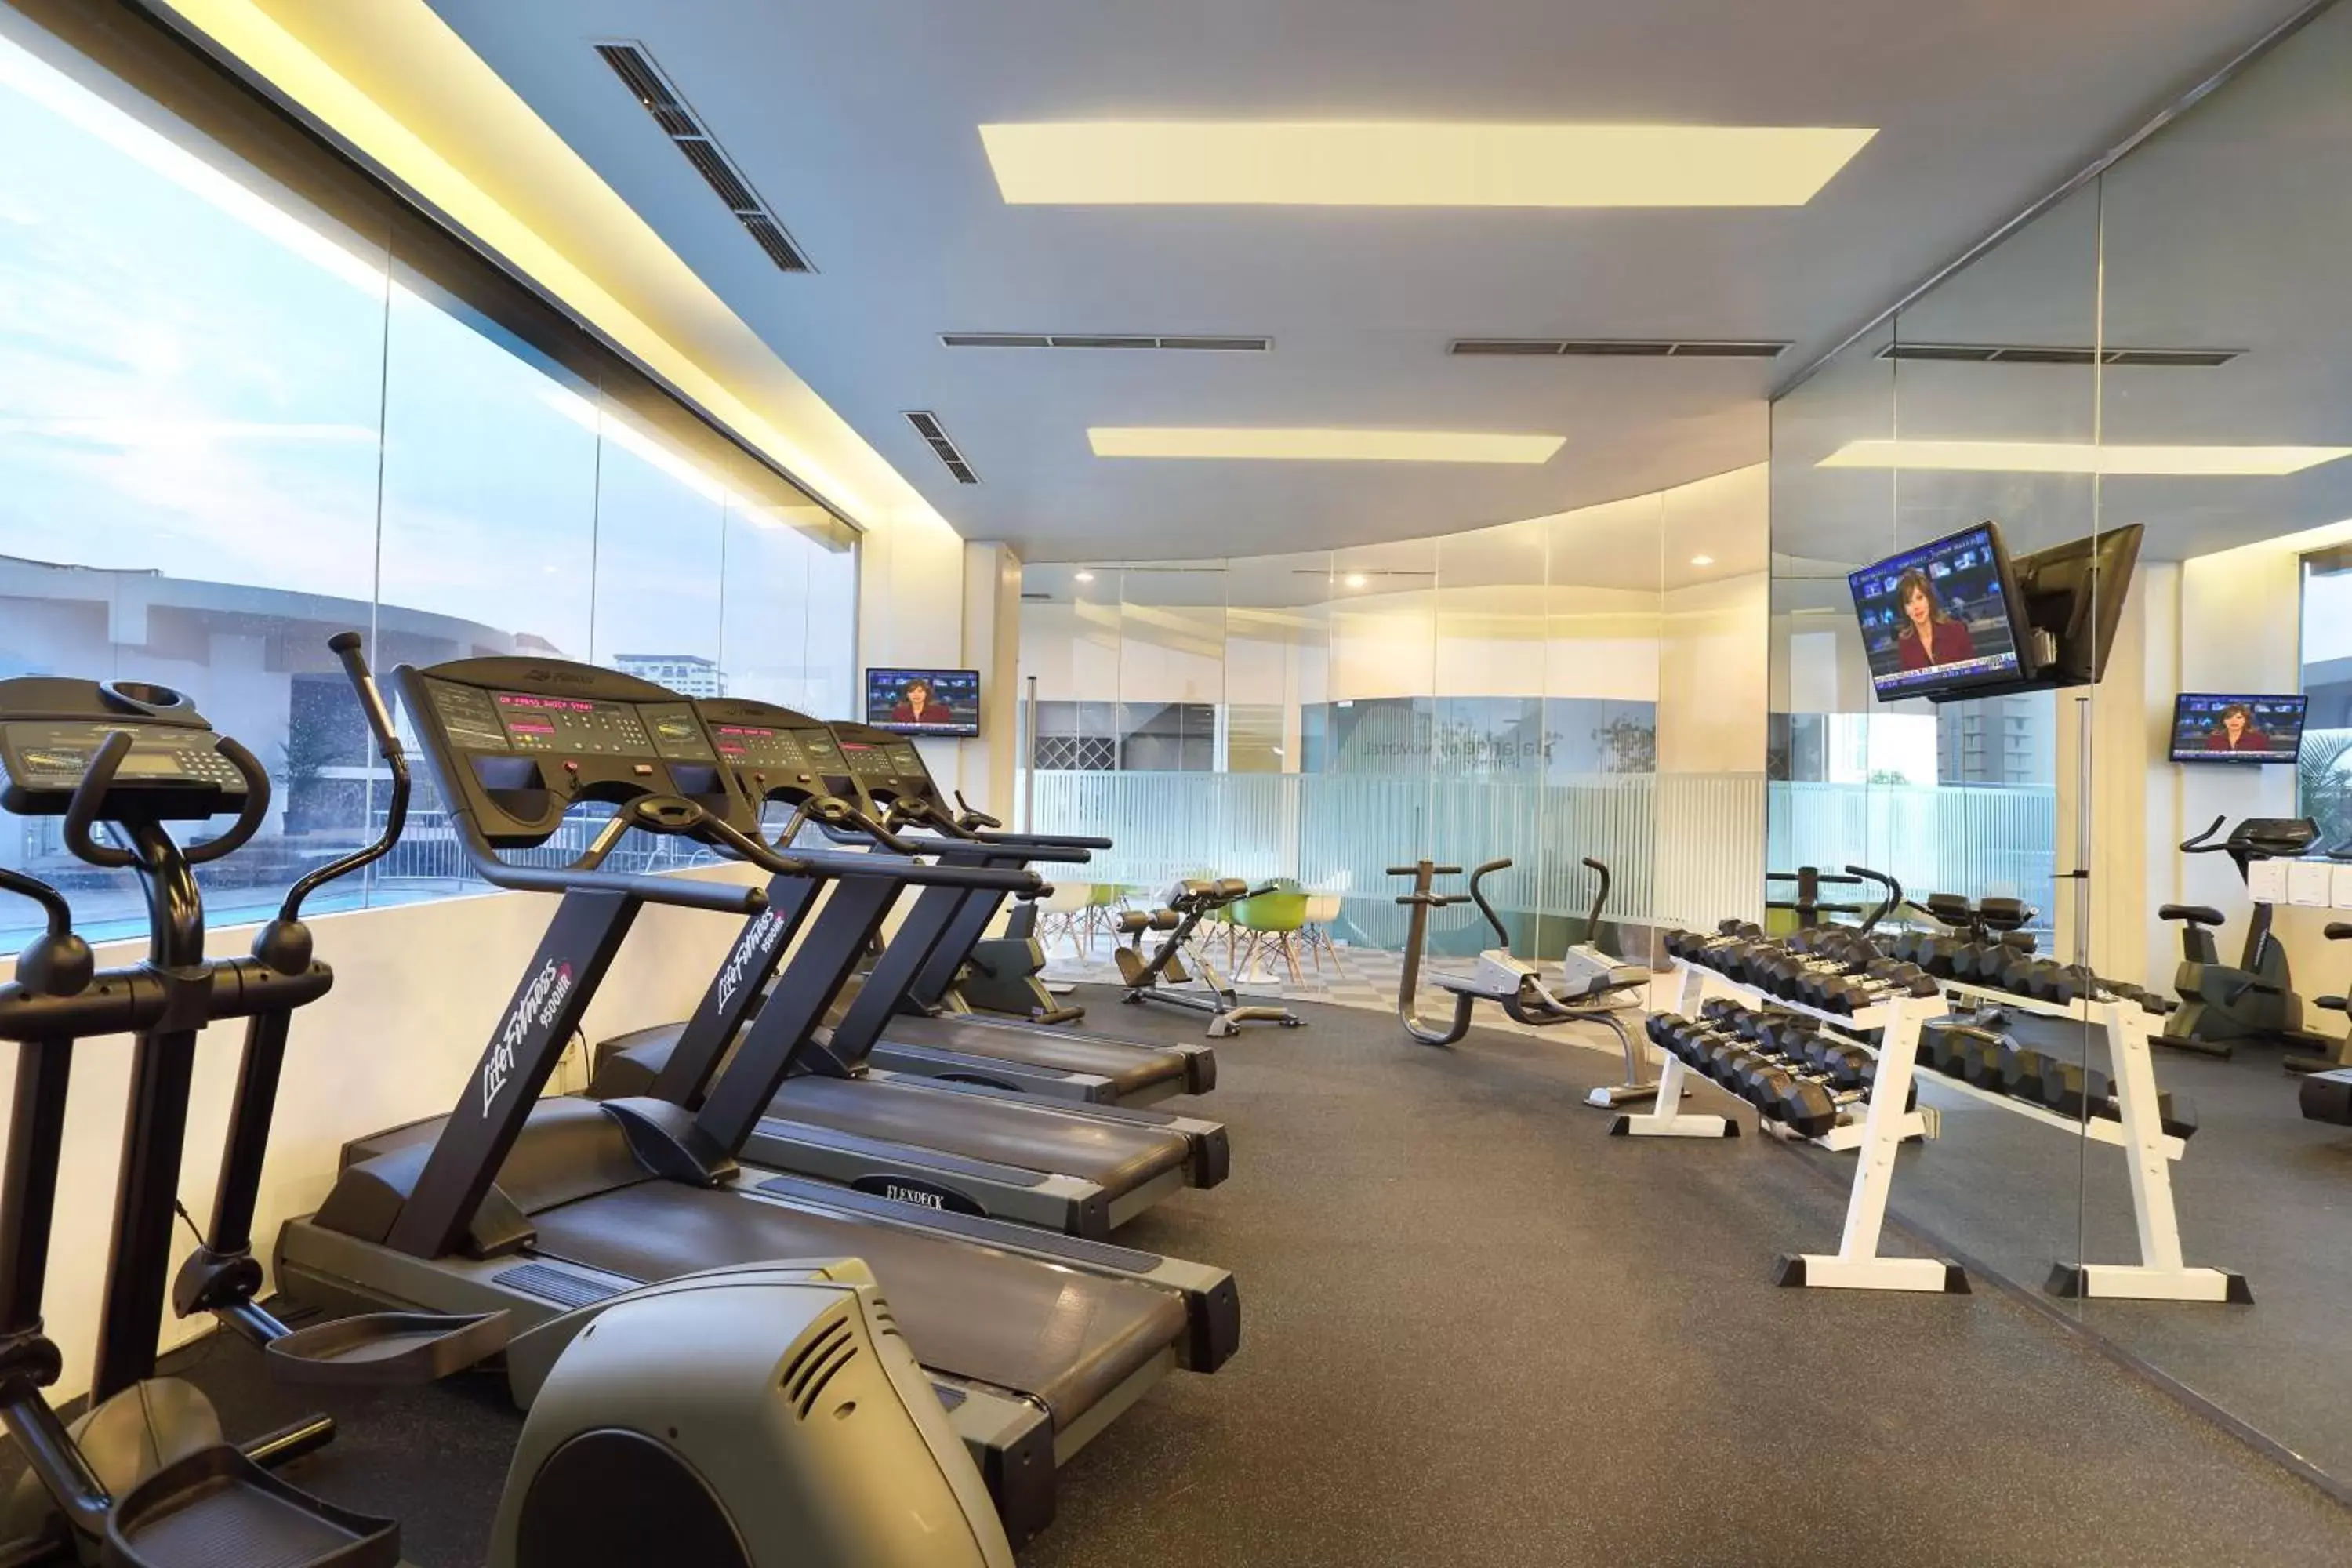 Fitness centre/facilities, Fitness Center/Facilities in Novotel Jakarta Gajah Mada